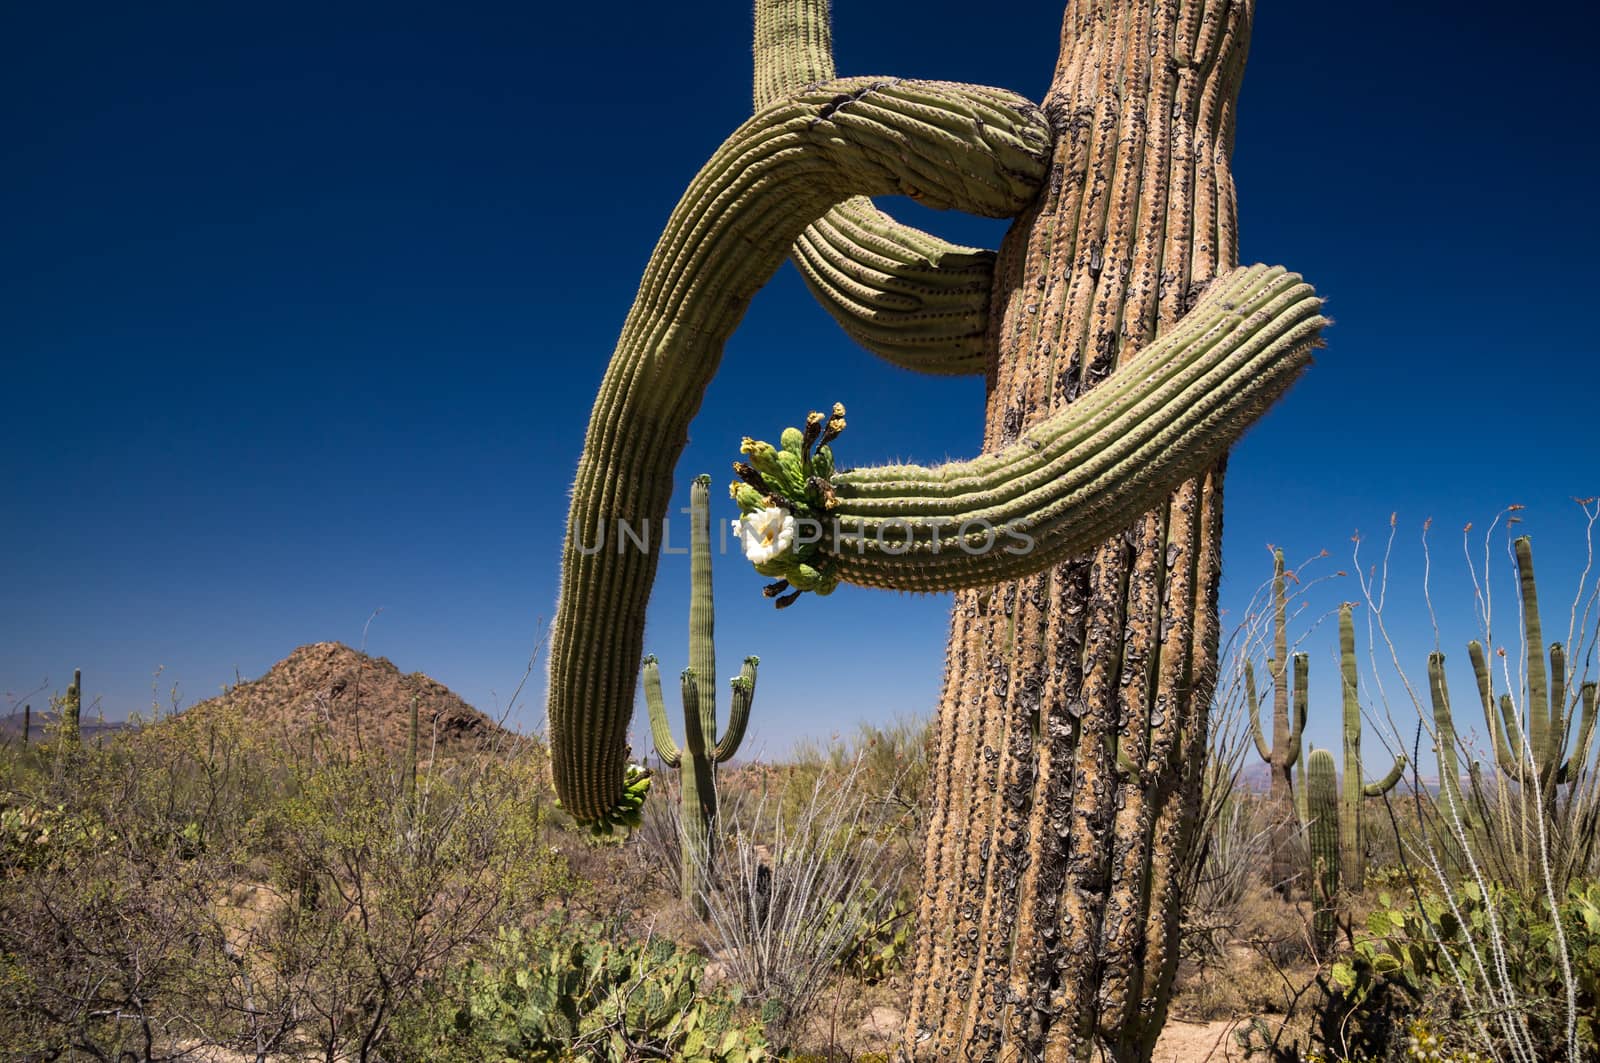 Saguaros in bloom in Sonoran Desert